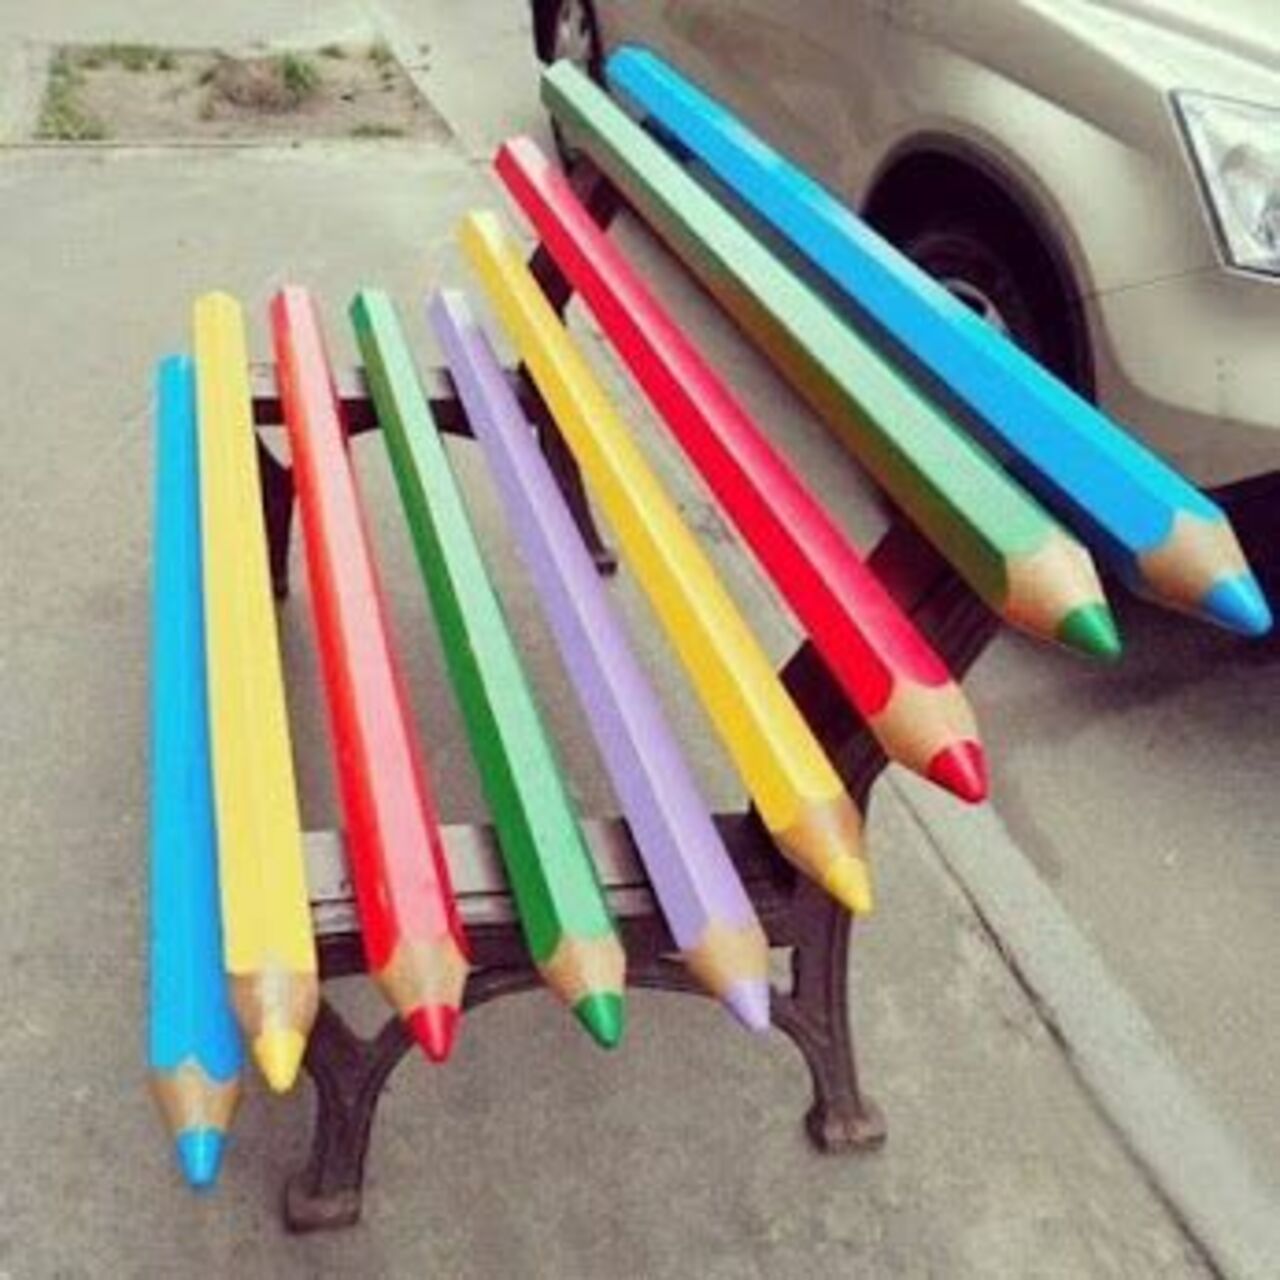 Creative bench doubles as street #art https://t.co/nbTosc8lgo